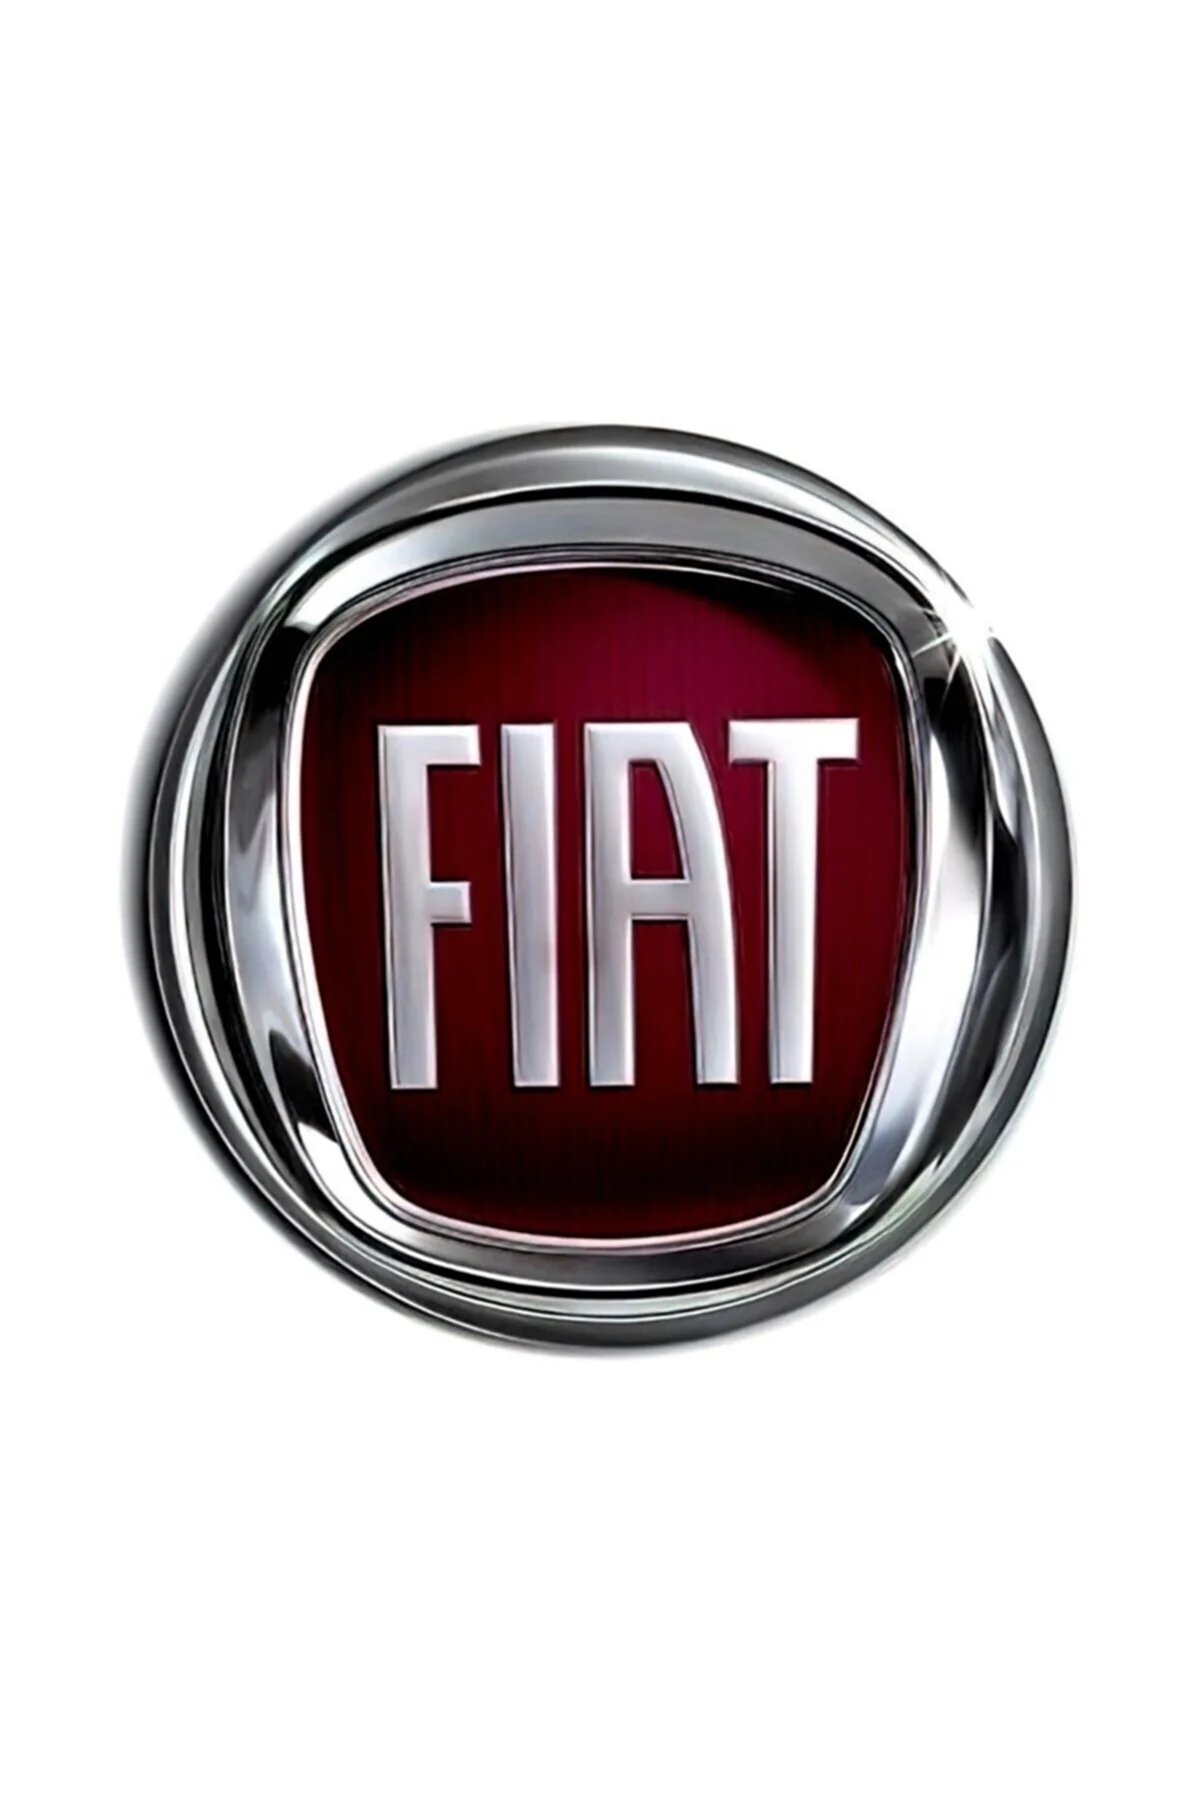 Fiat professional logo